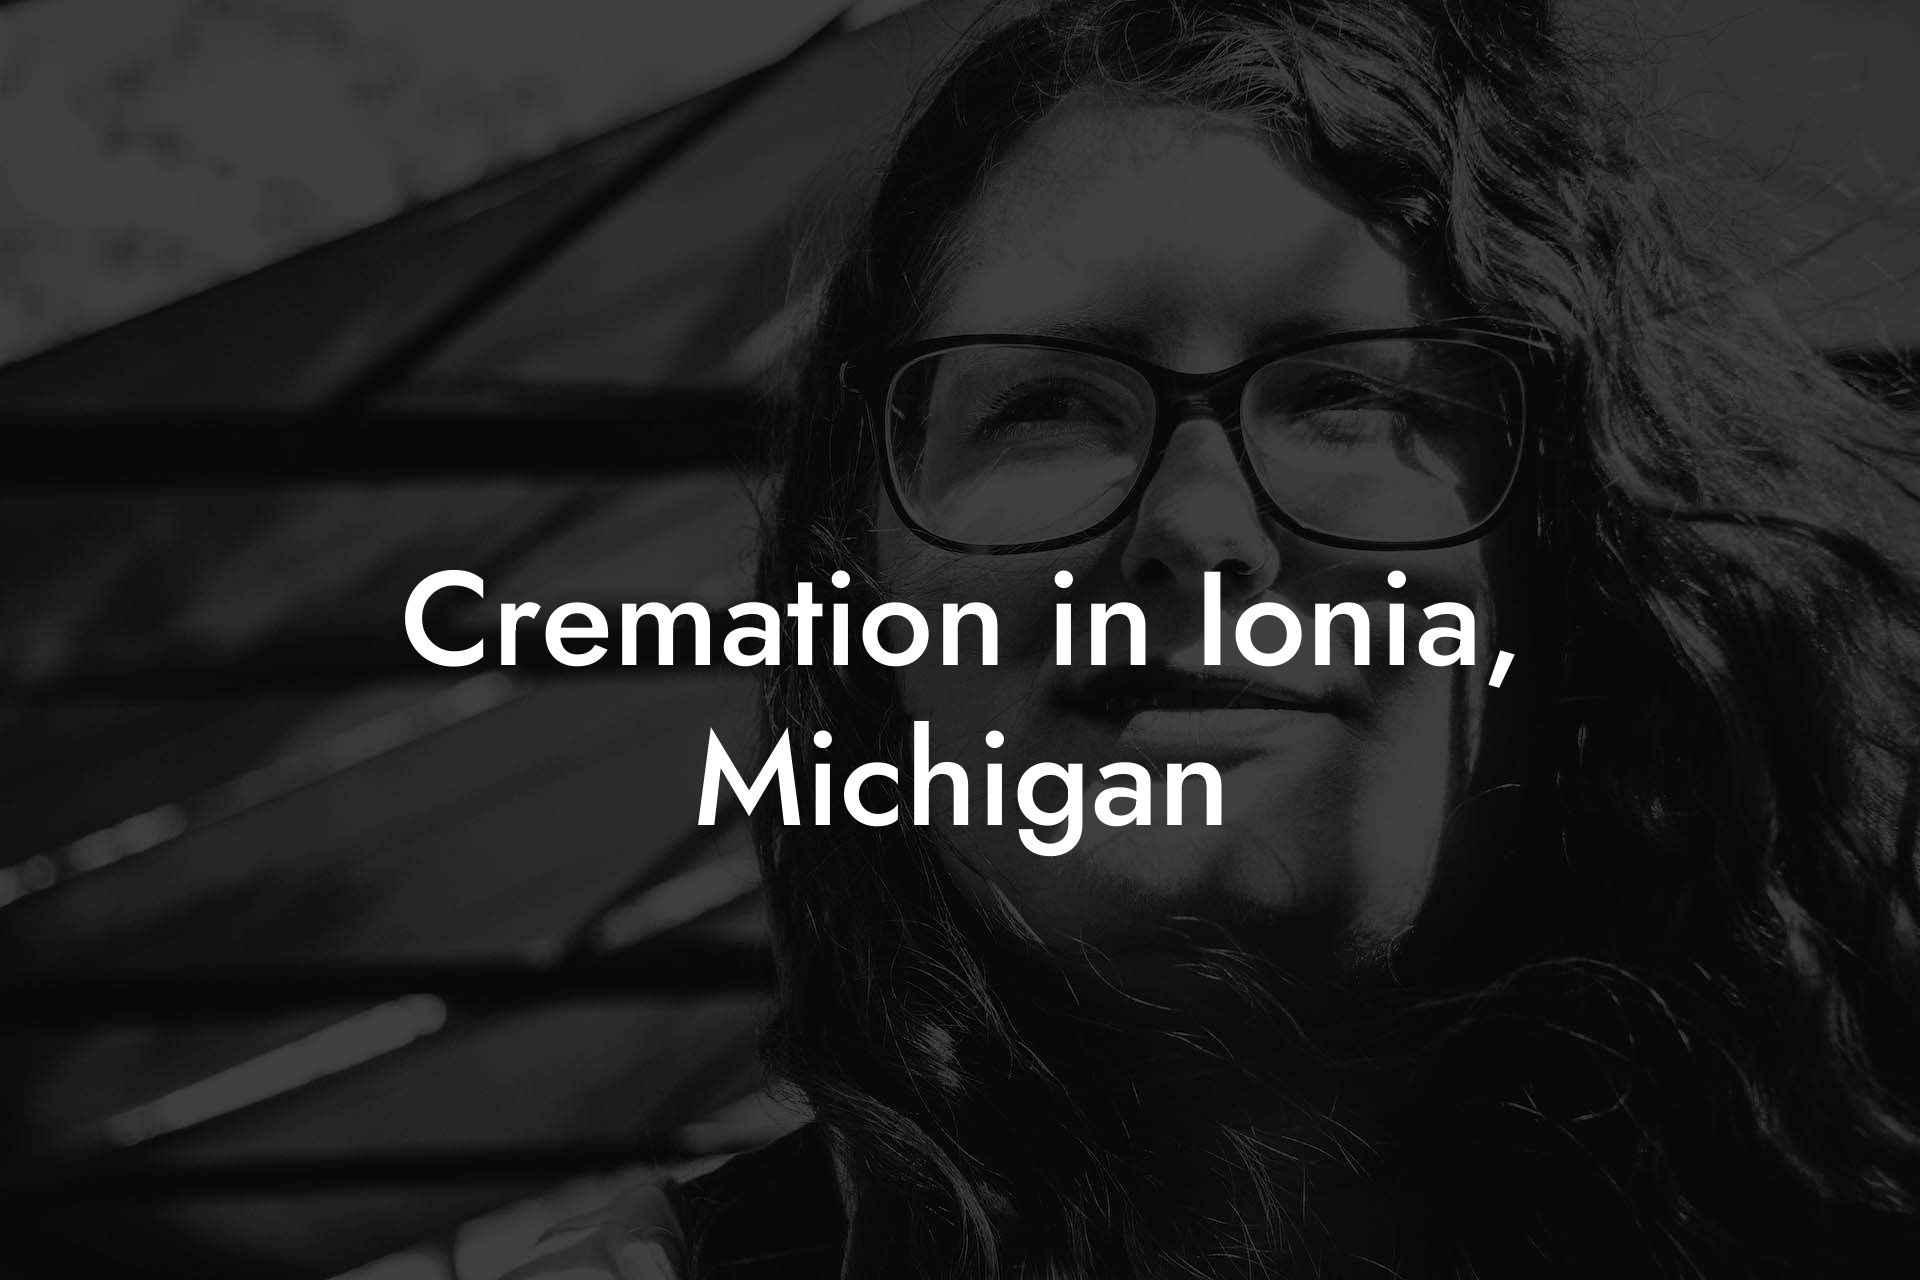 Cremation in Ionia, Michigan